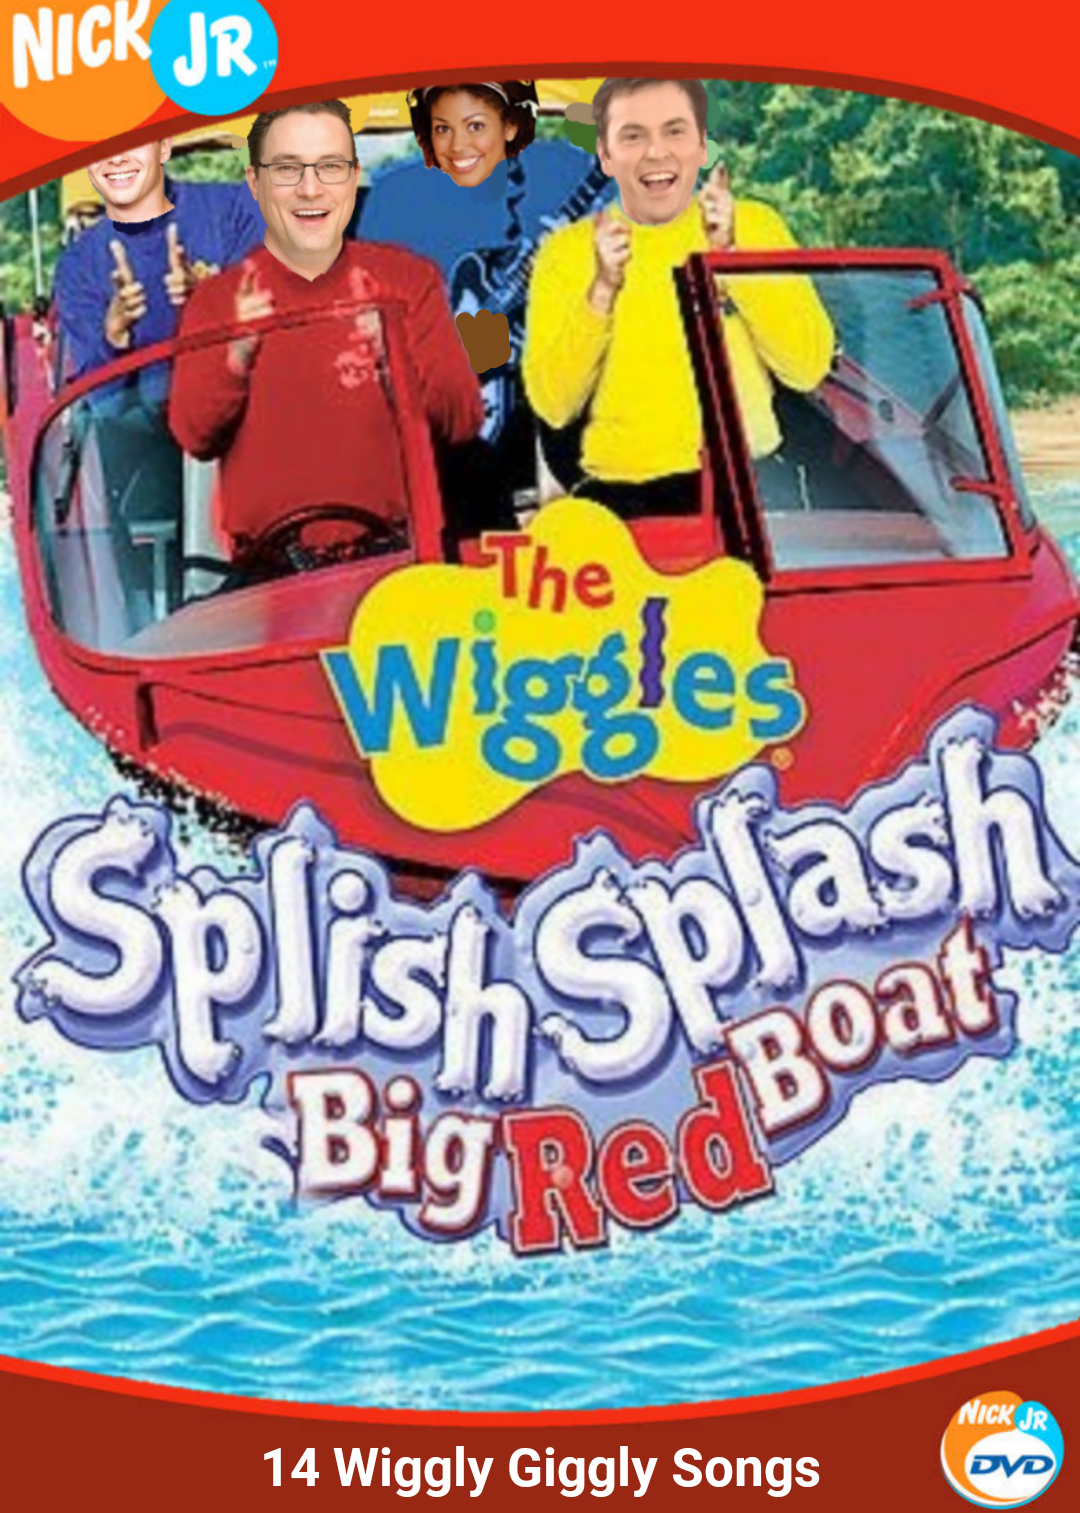 Nick Jr's The Wiggles Splish Splash Big Red Boat (video 